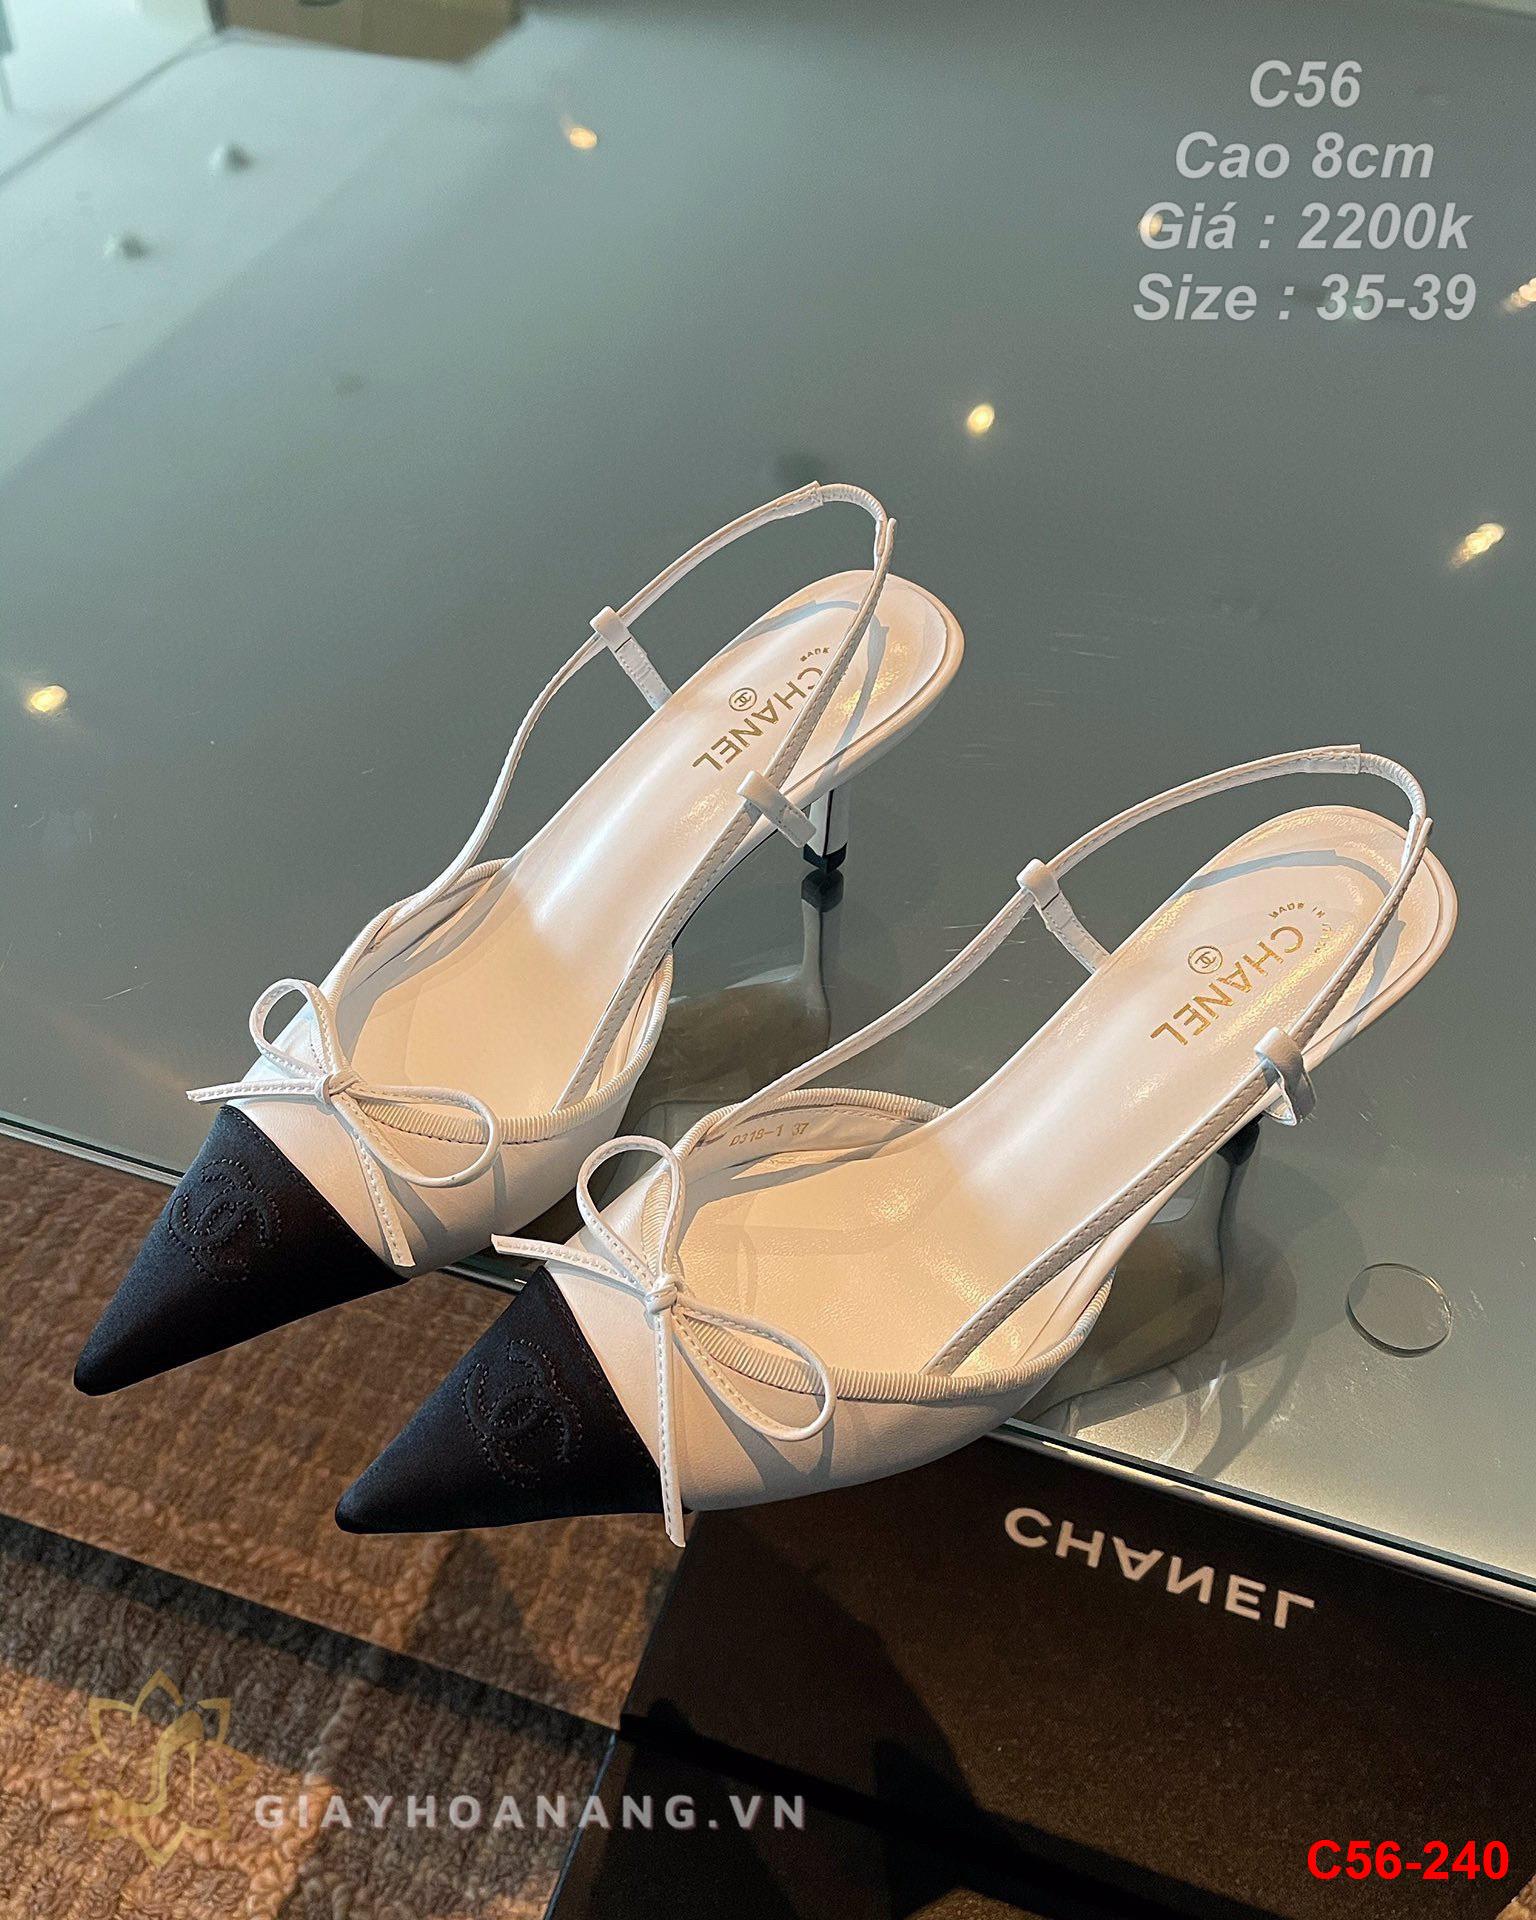 C56-240 Chanel sandal cao 8cm siêu cấp